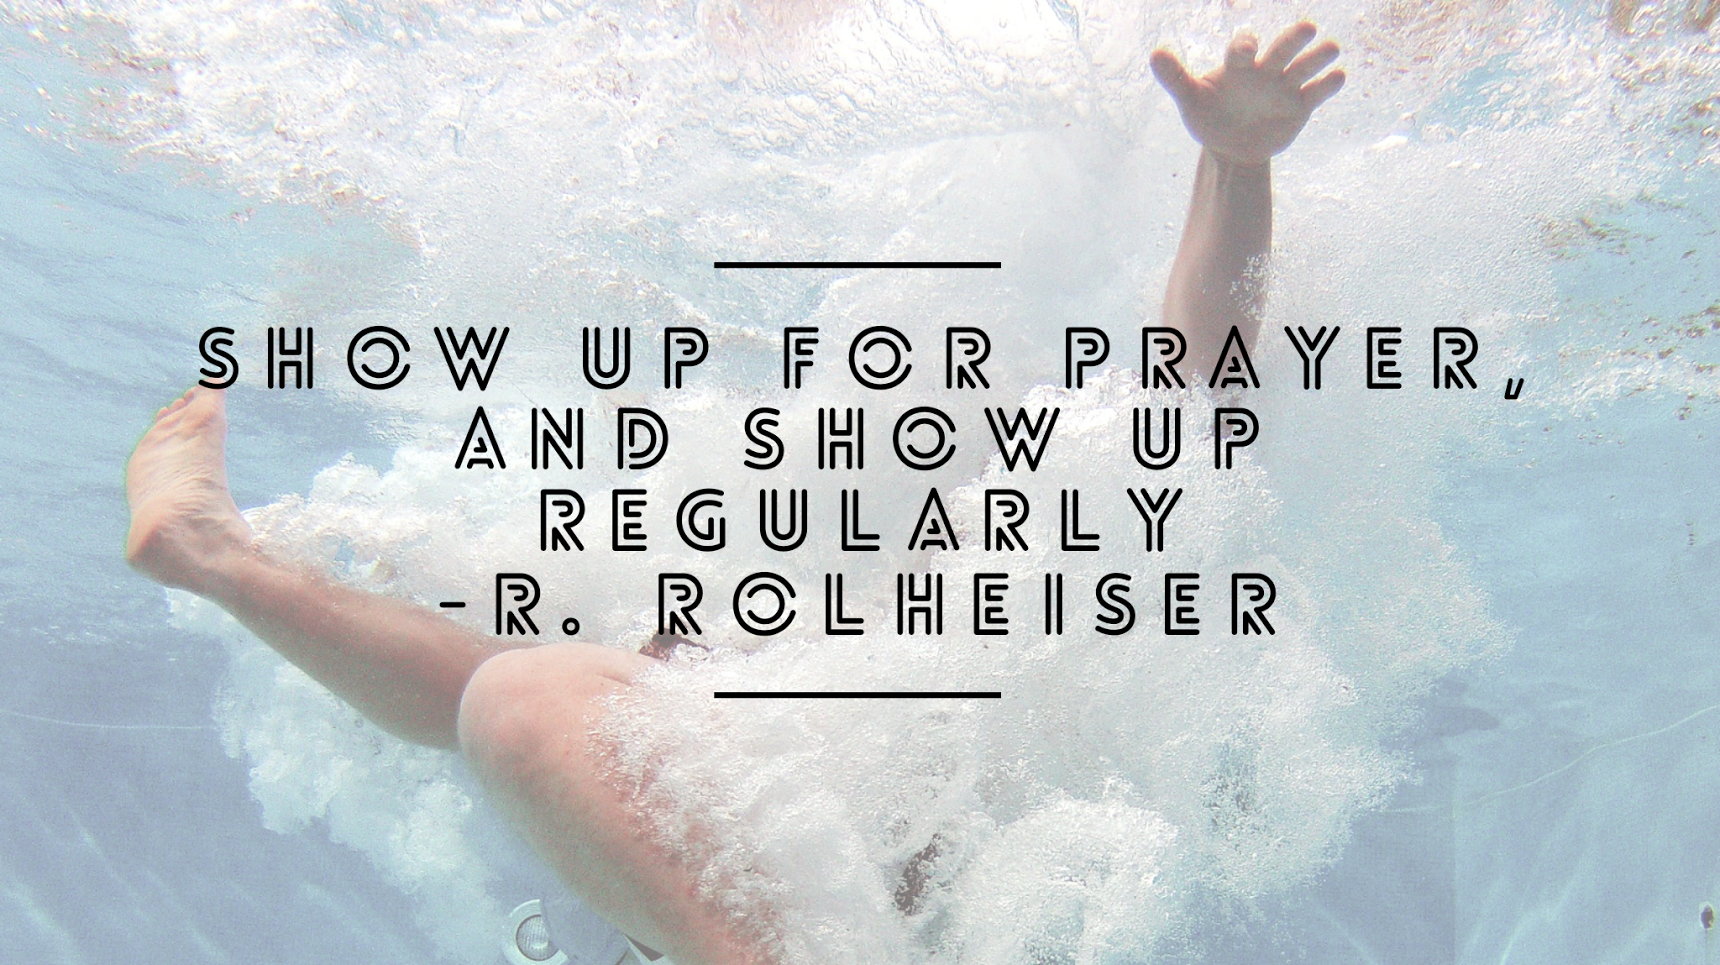 Show Up For Prayer